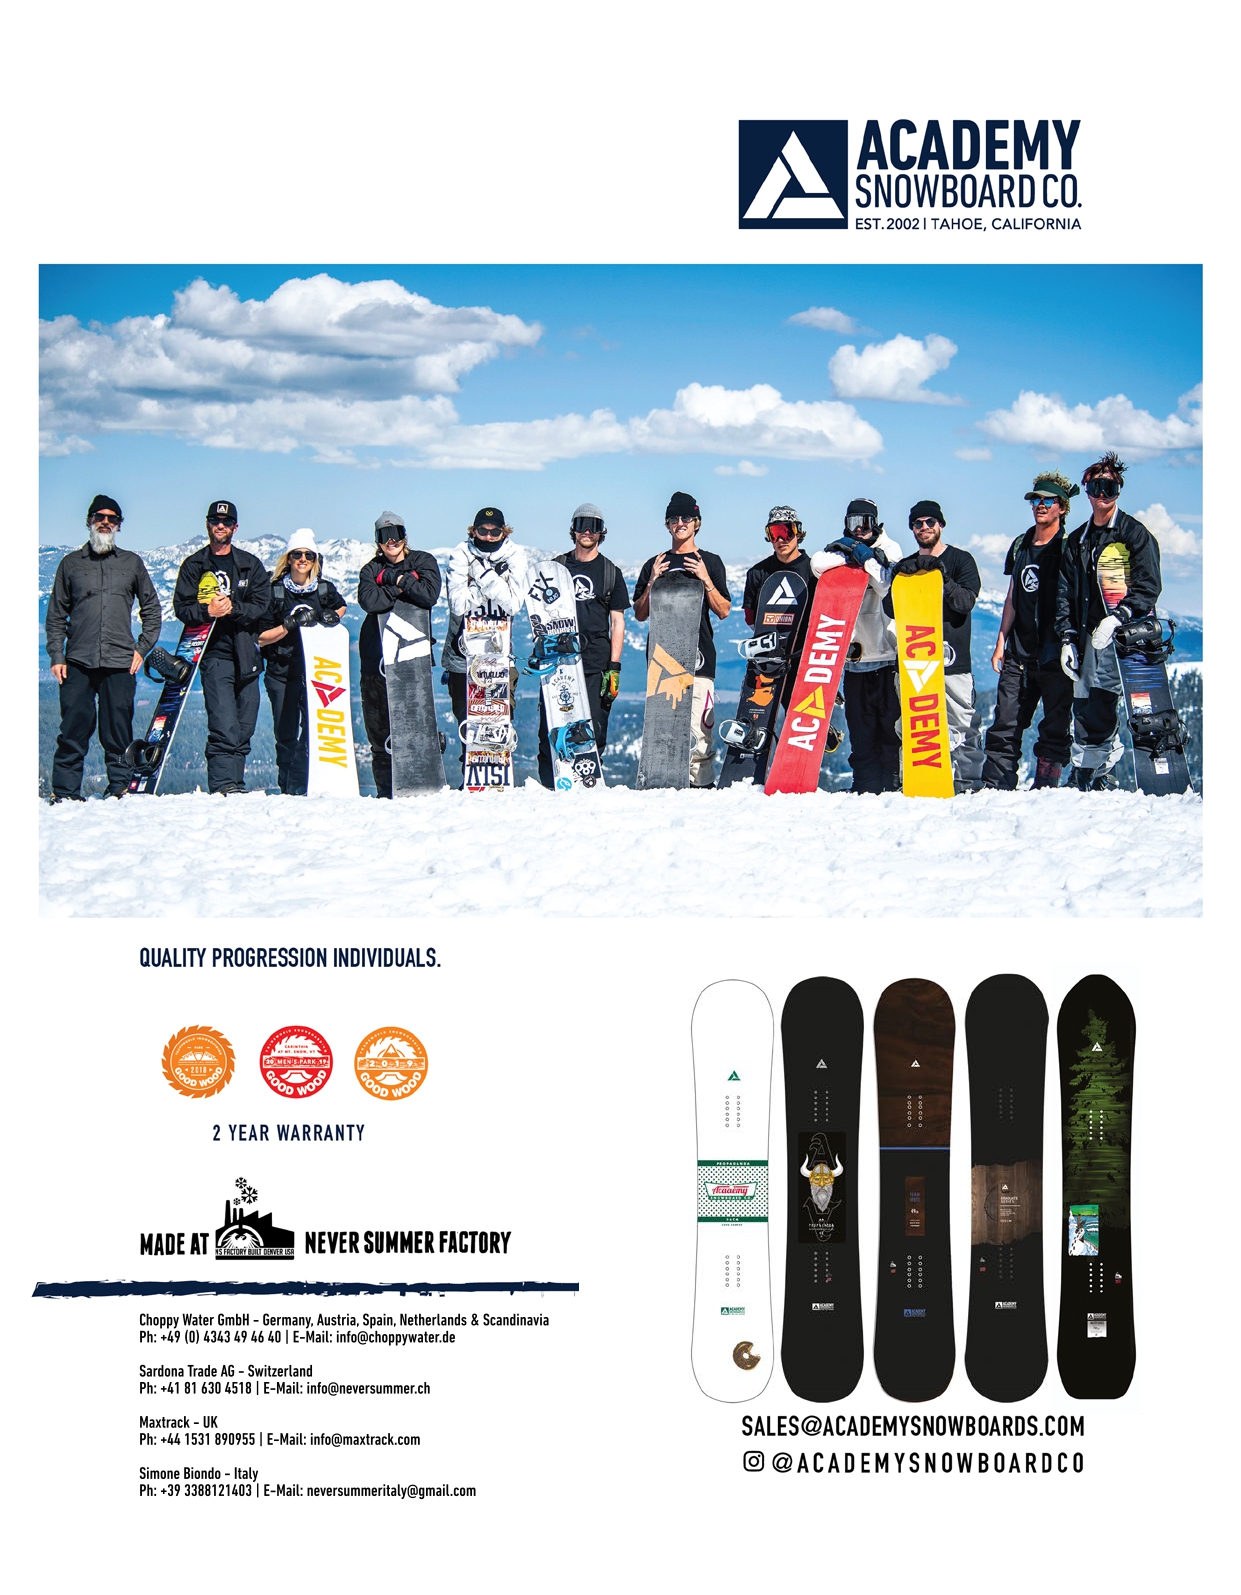 105 Academy snowboards